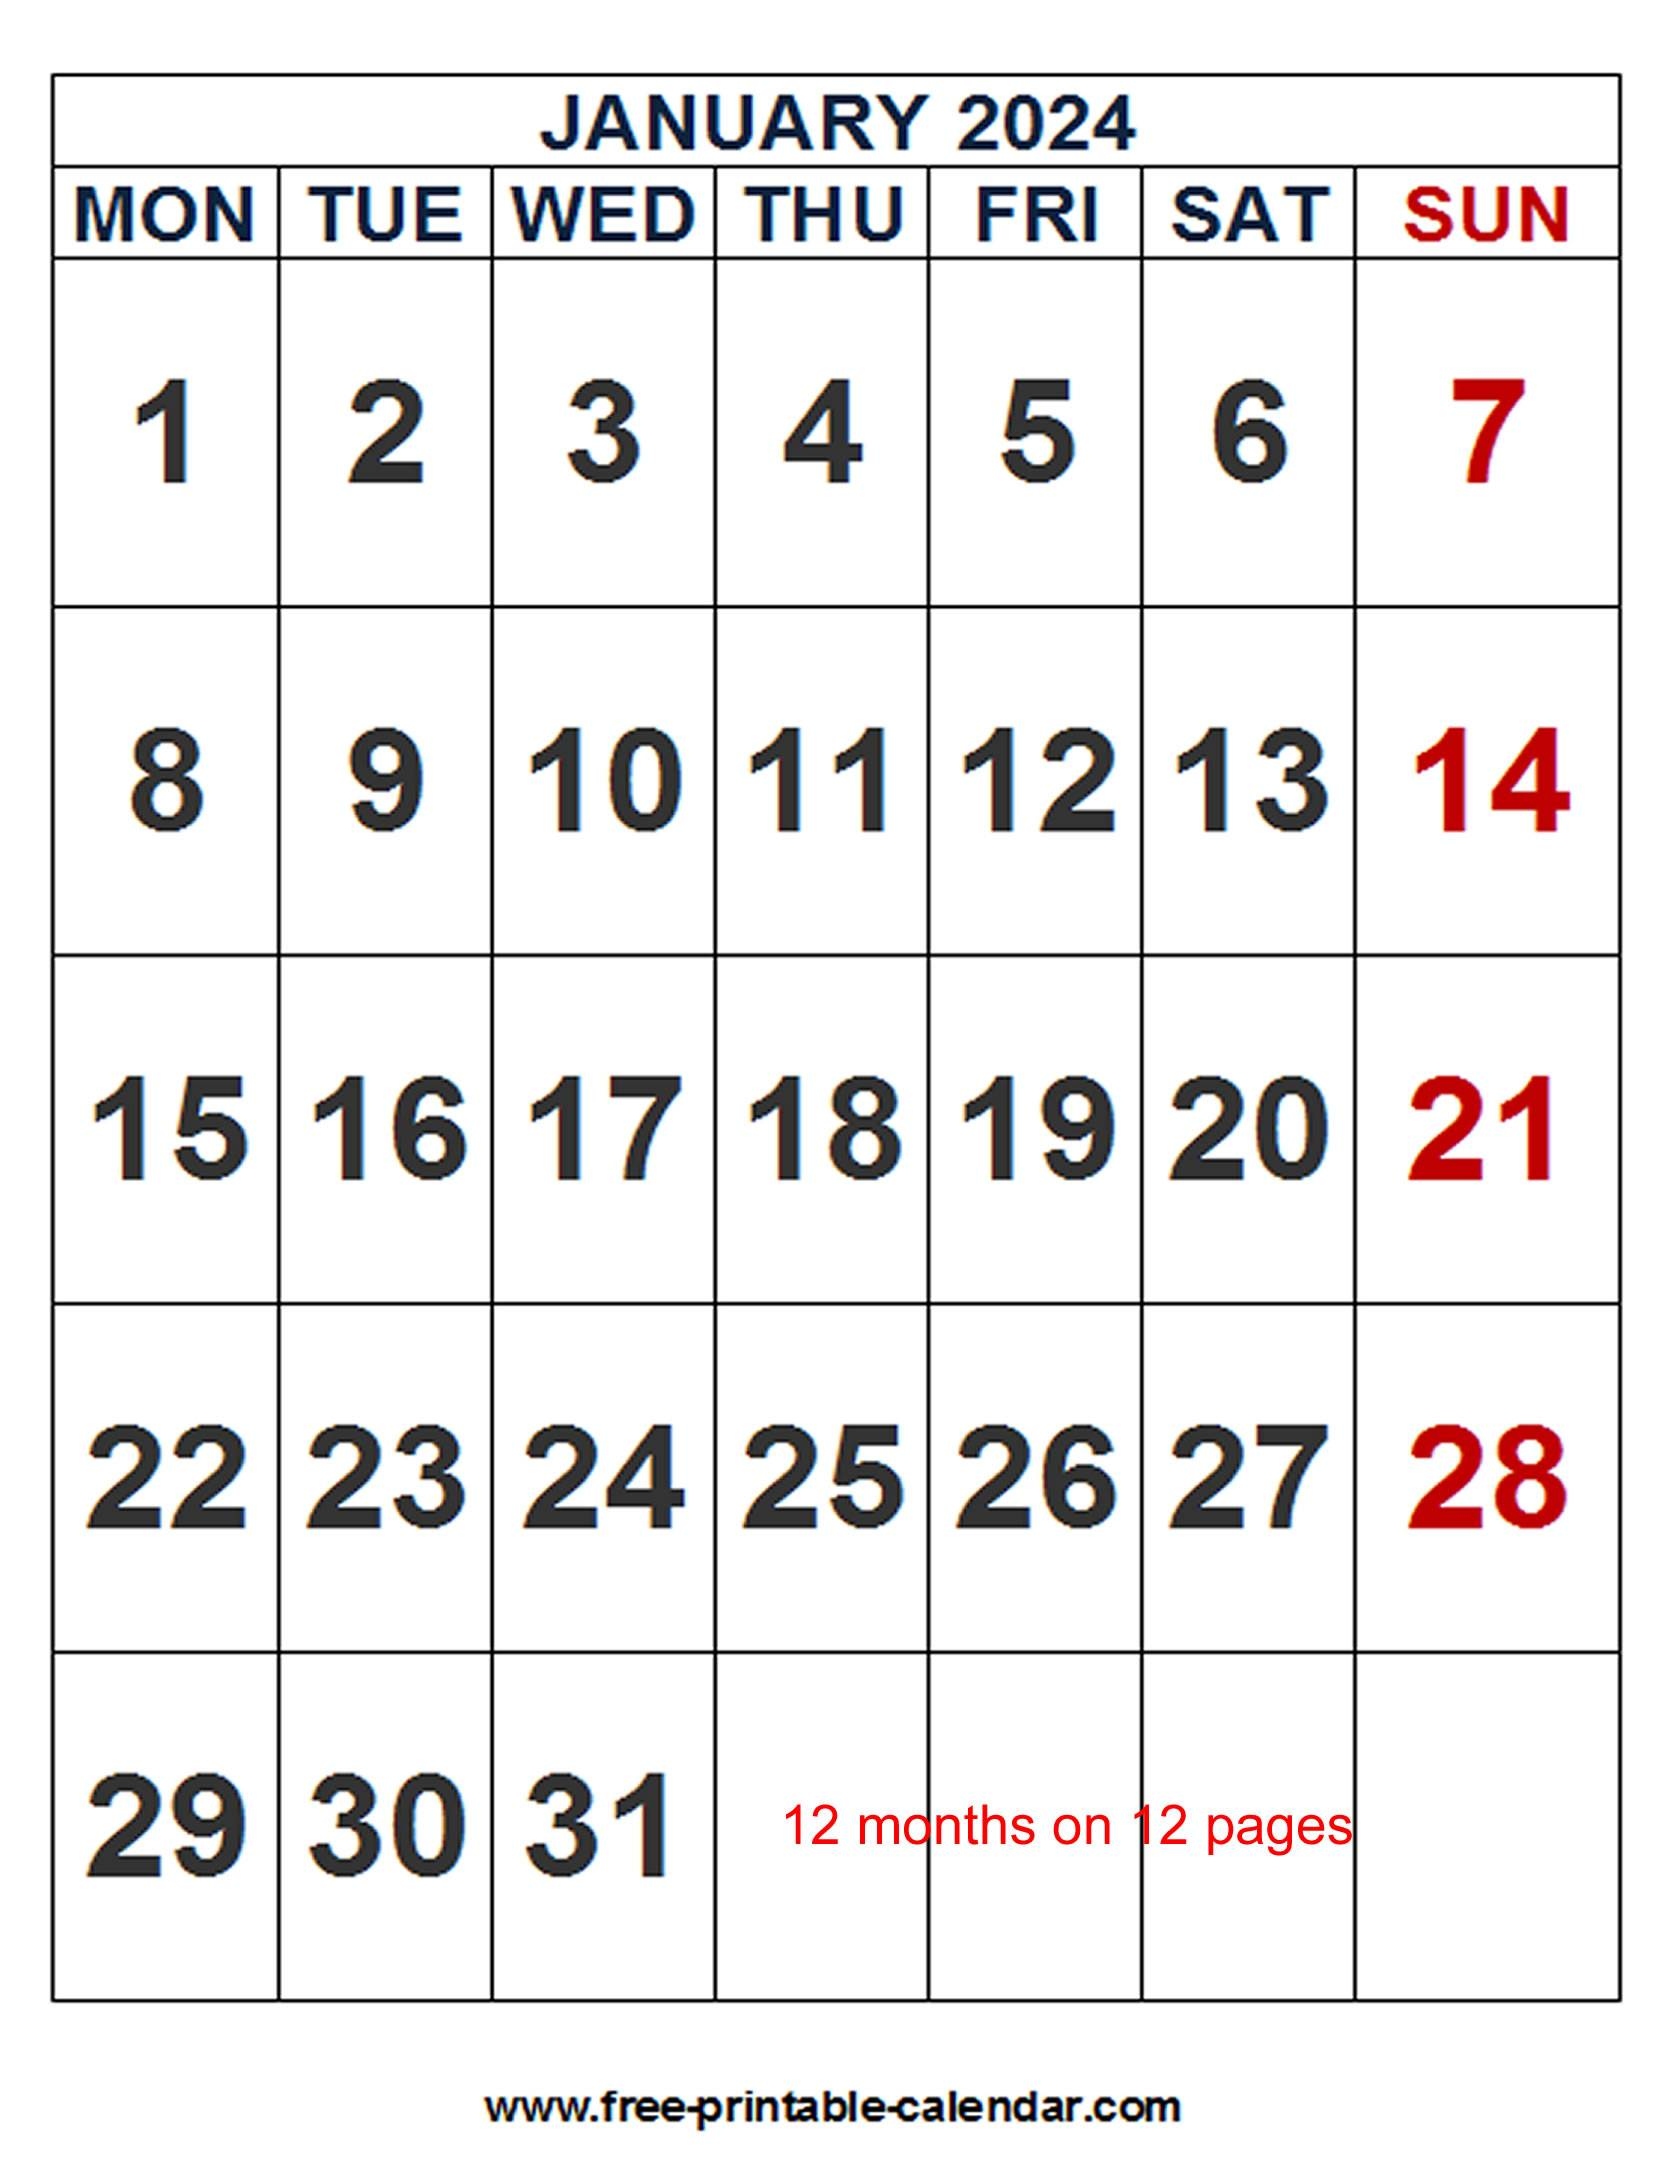 2024 Calendar Word Template - Free-Printable-Calendar inside Free Printable Calendar 2024 Monthly Word